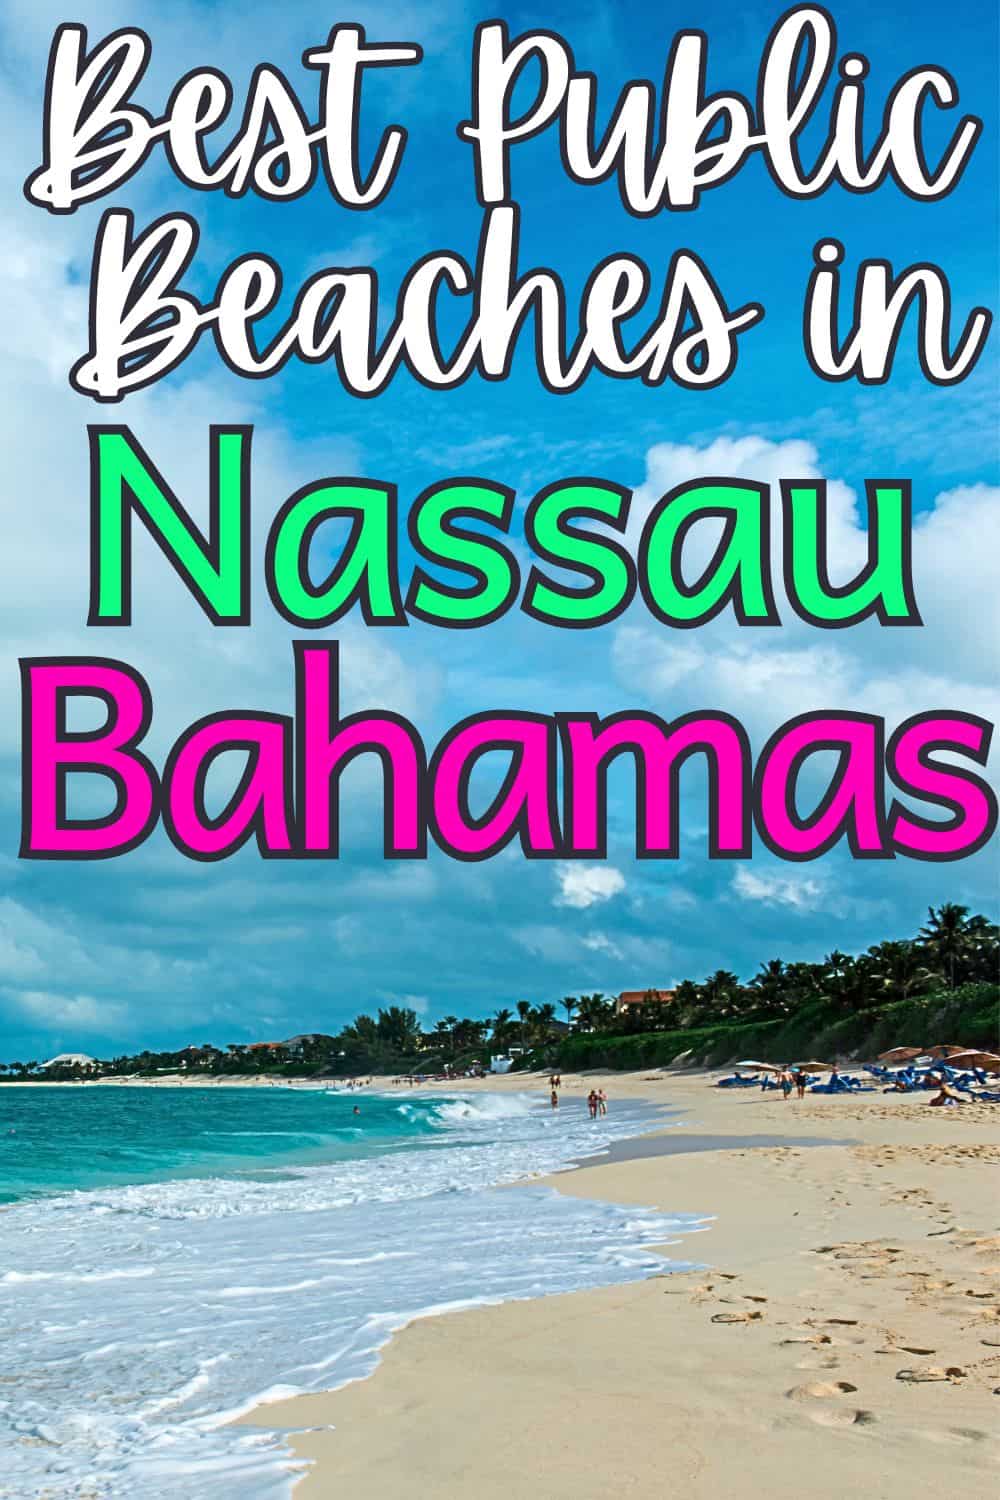 Nassau Public Beaches Near the Cruise Port